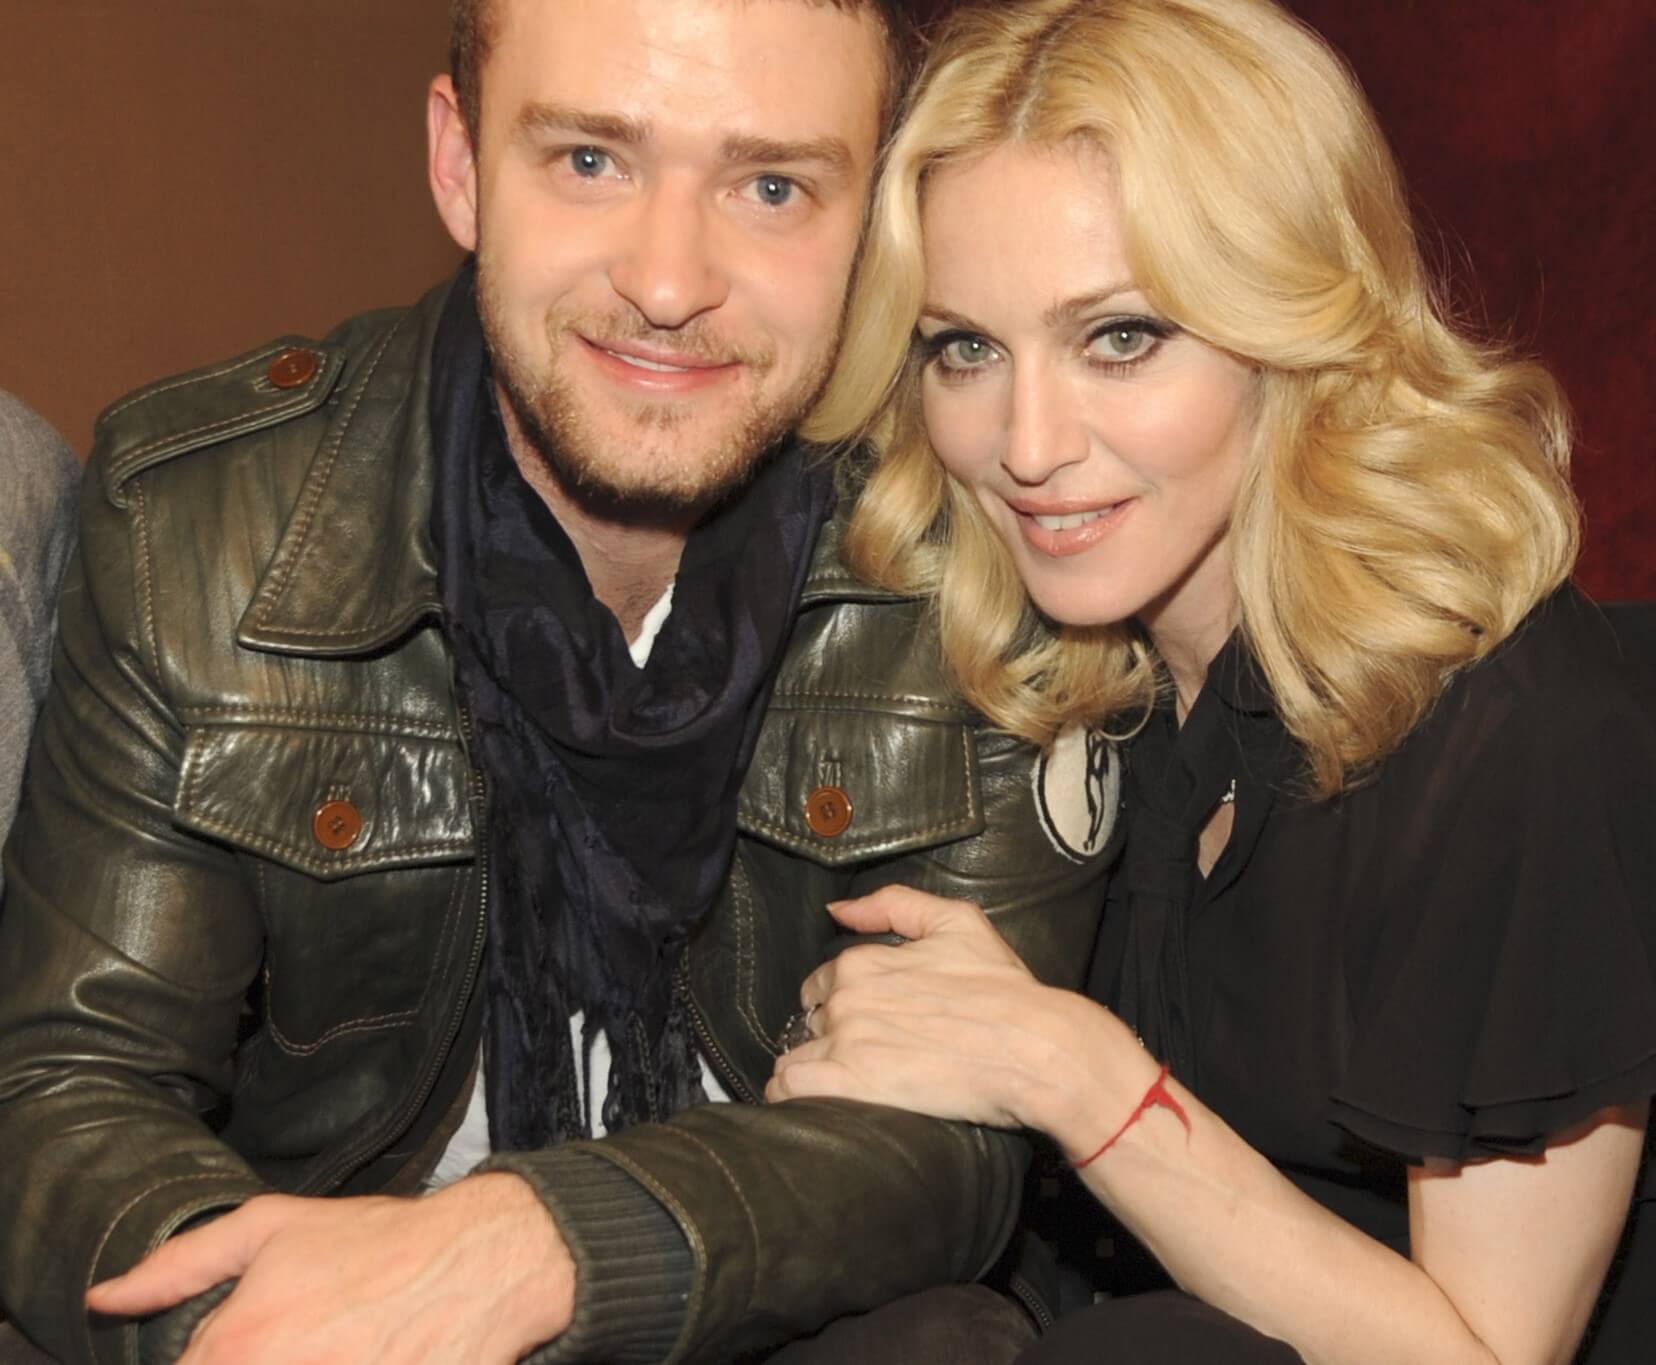 "4 Minutes" stars Justin Timberlake and Madonna wearing black